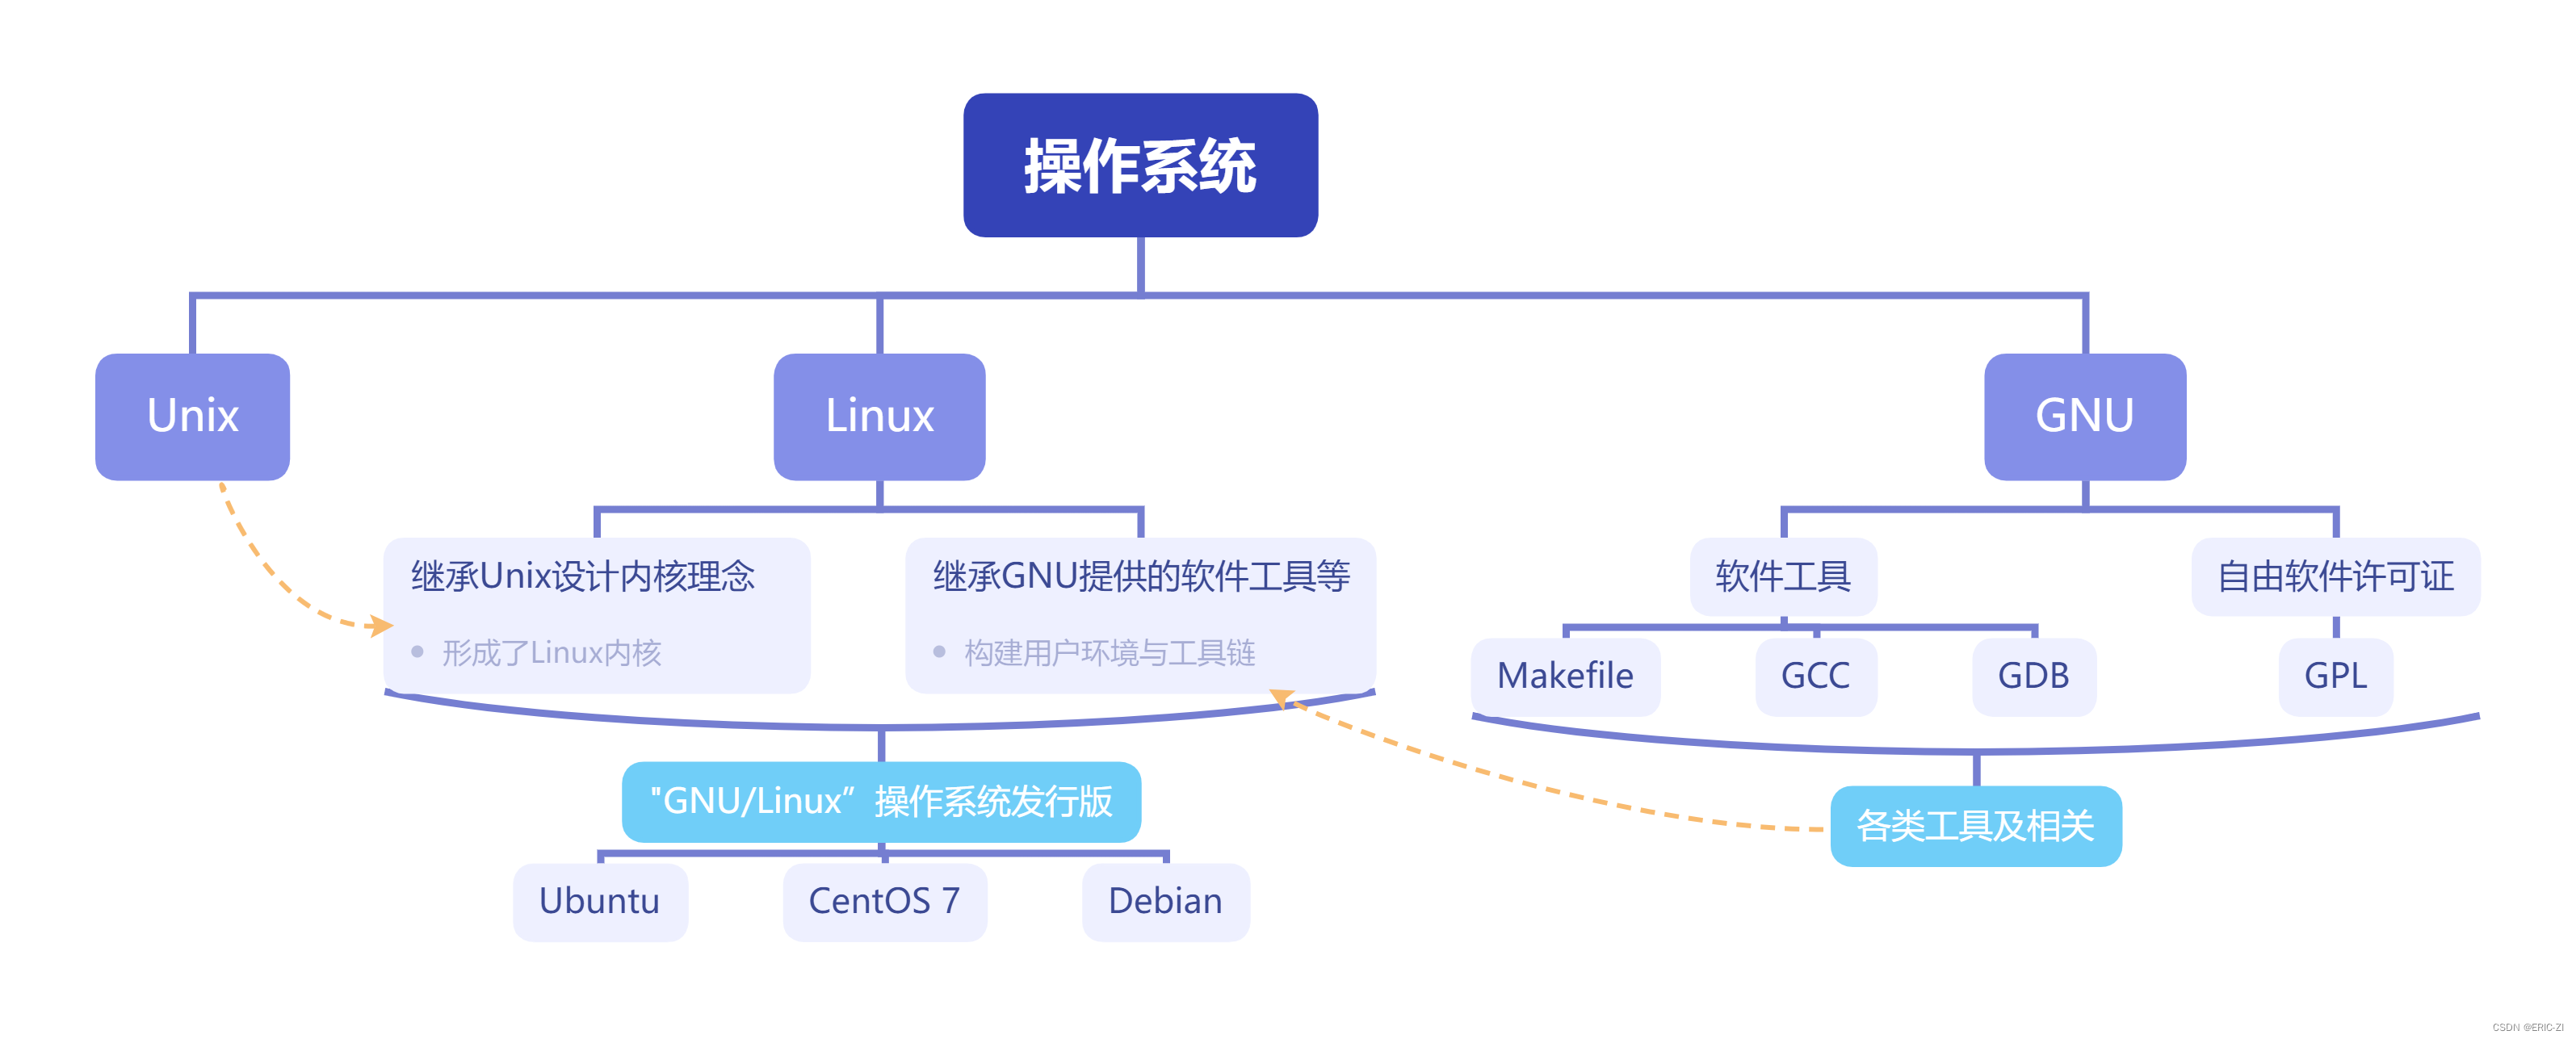 GNU、Unix、Linux、Makefile、GCC、GDB、GPL、CentOS 7、Ubuntu之间的关系